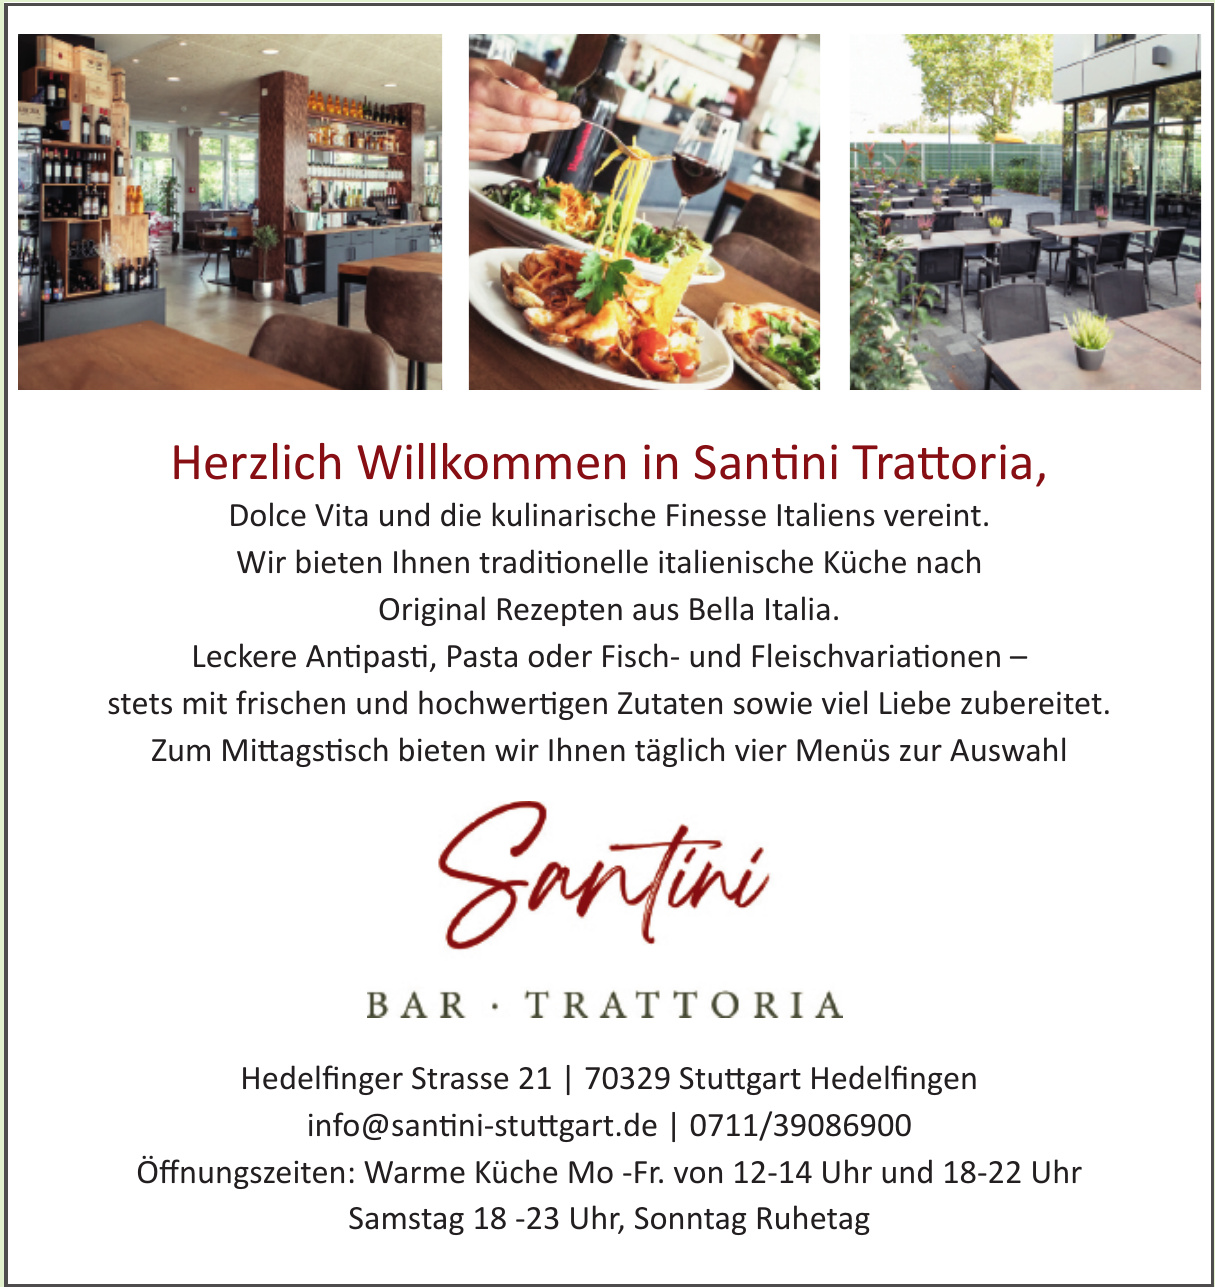 Santini - Bar, Trattoria